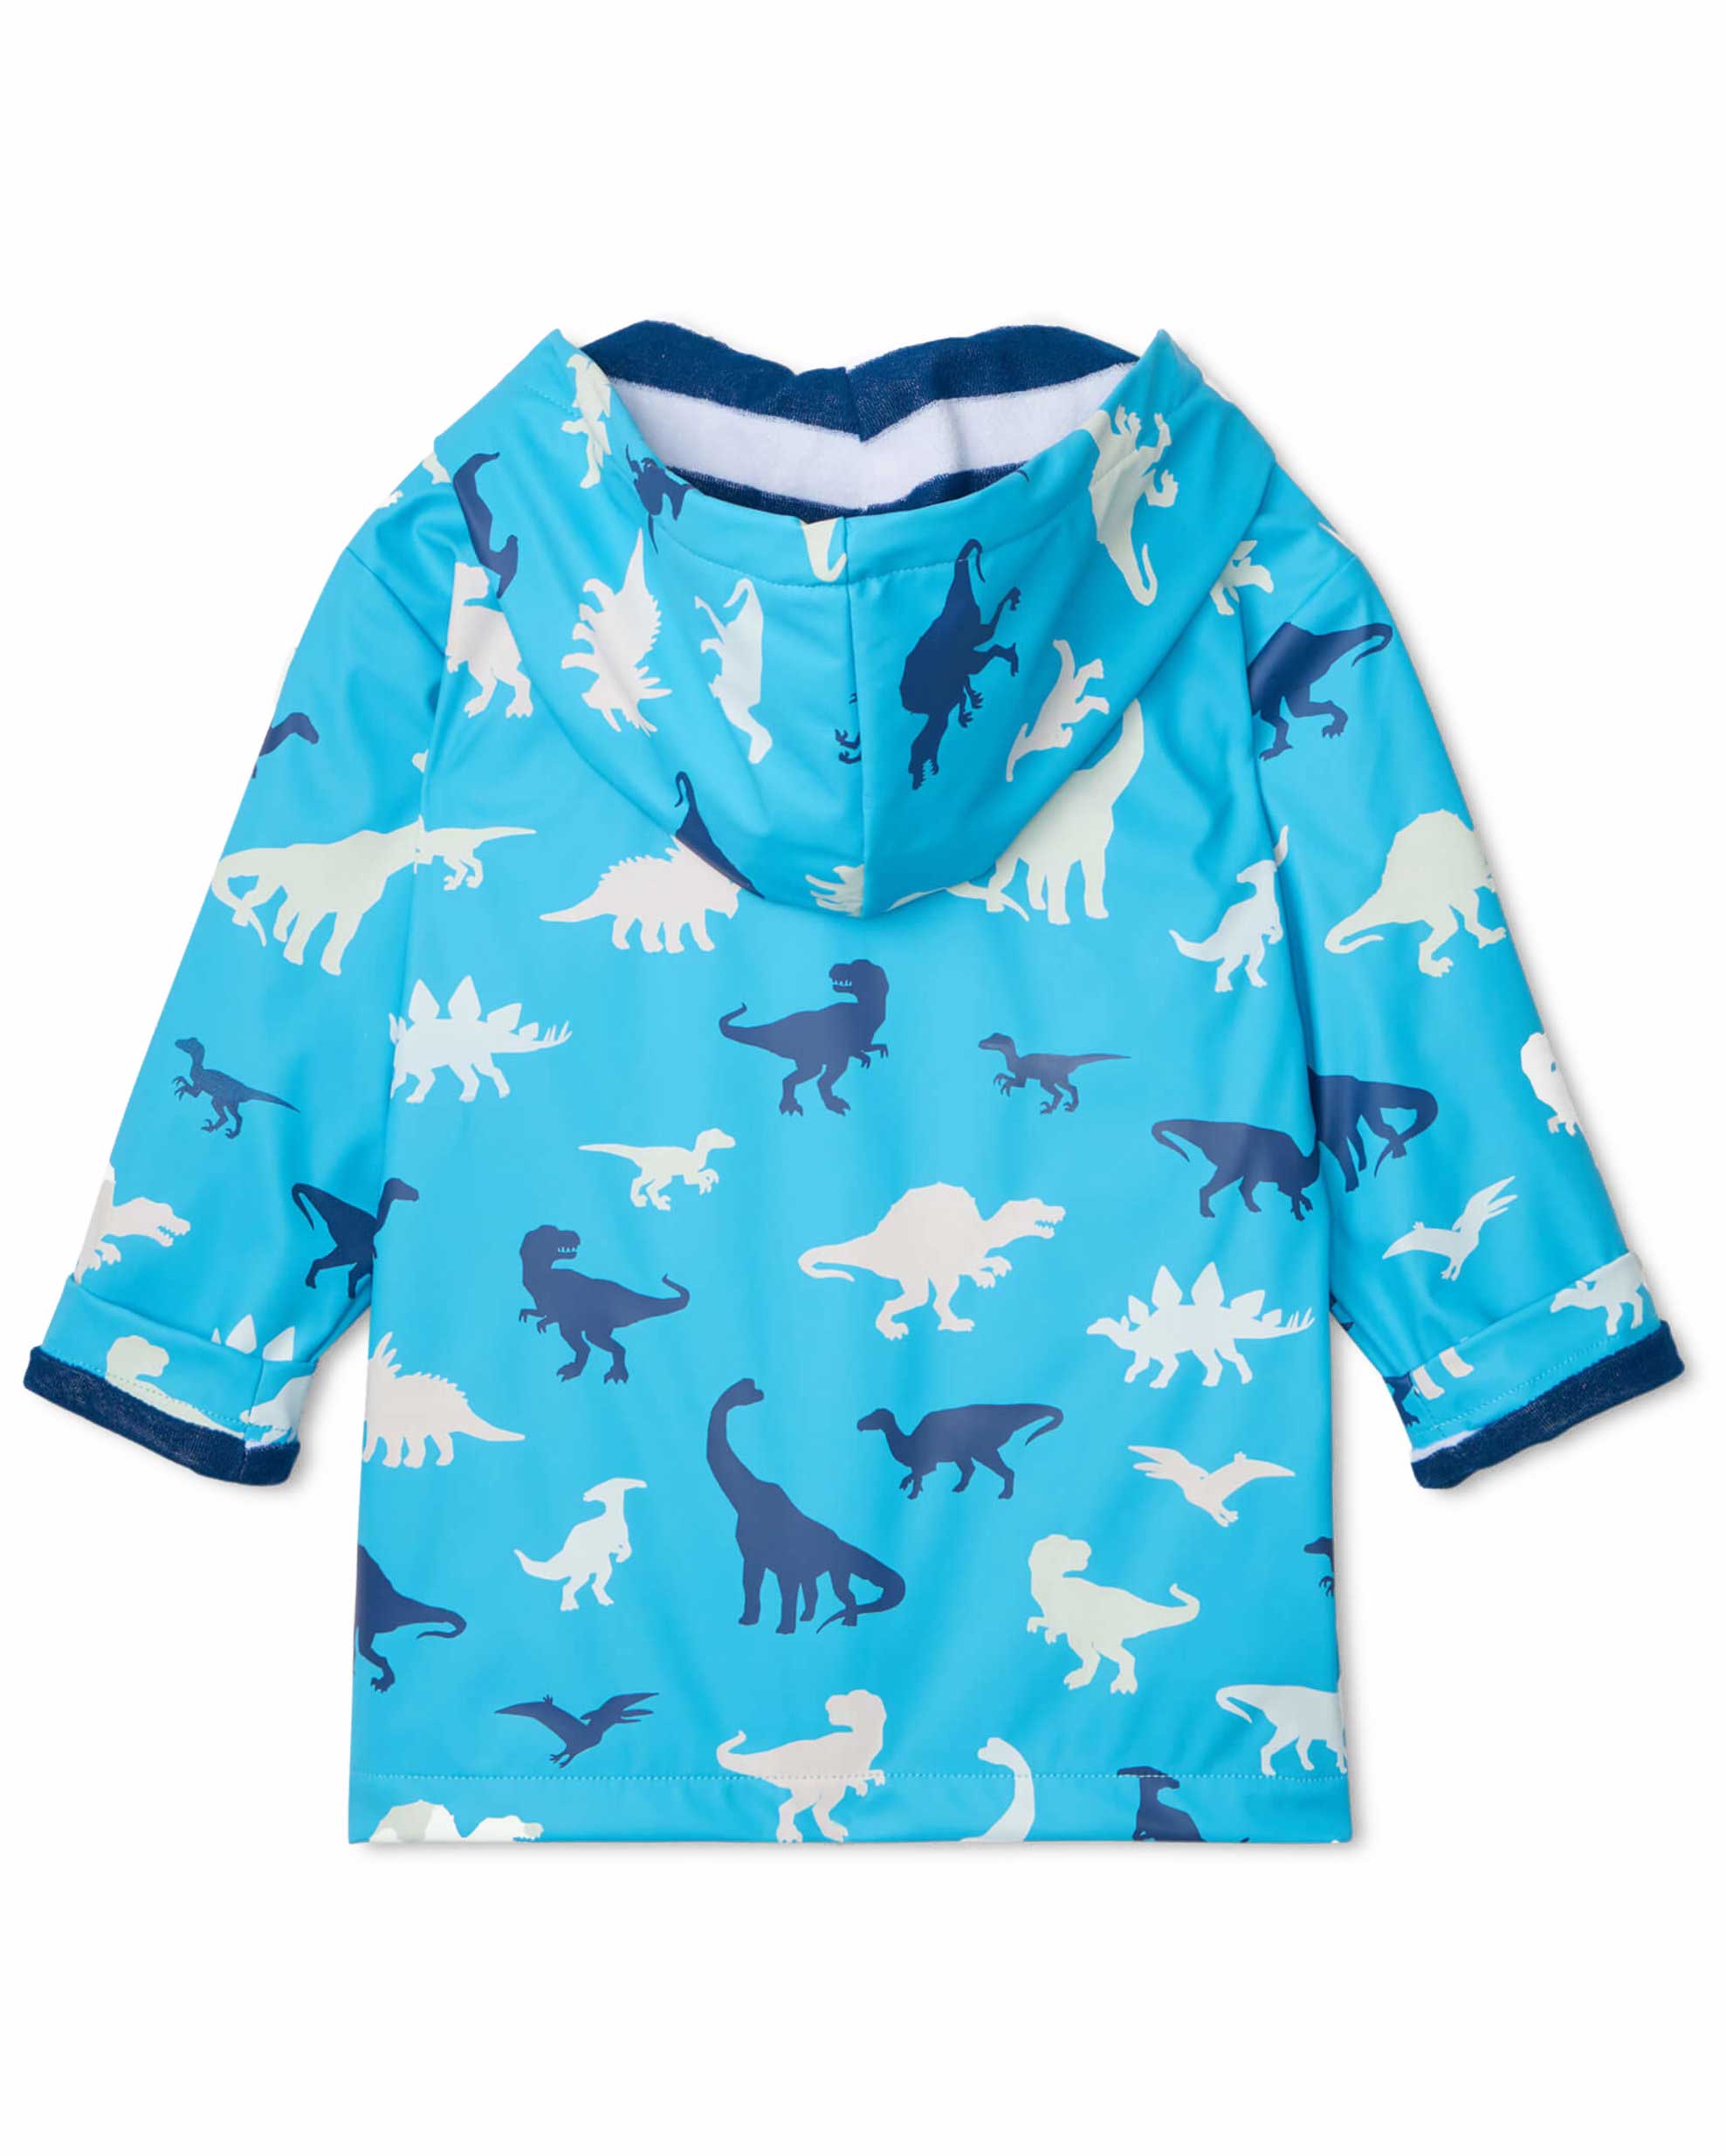 Prehistoric Dinos Colour Changing Raincoat